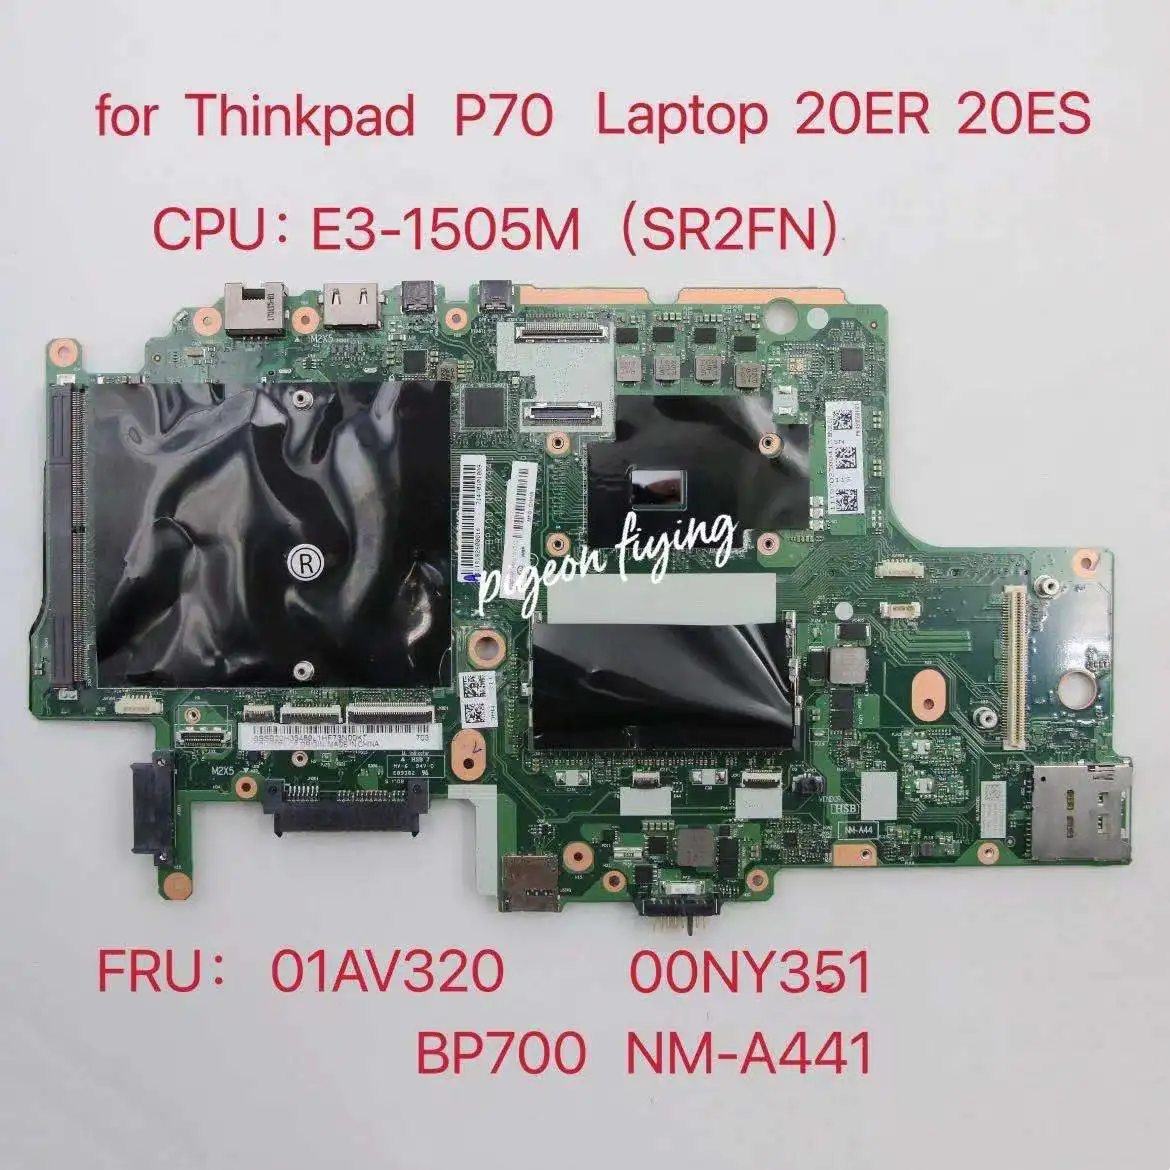 

BP700 NM-A441 Mainboard for Thinkpad P70 Laptop Motherboard CPU:E3-1505M（SR2FN) FRU: 01AV320 00NY351 100% Test Ok